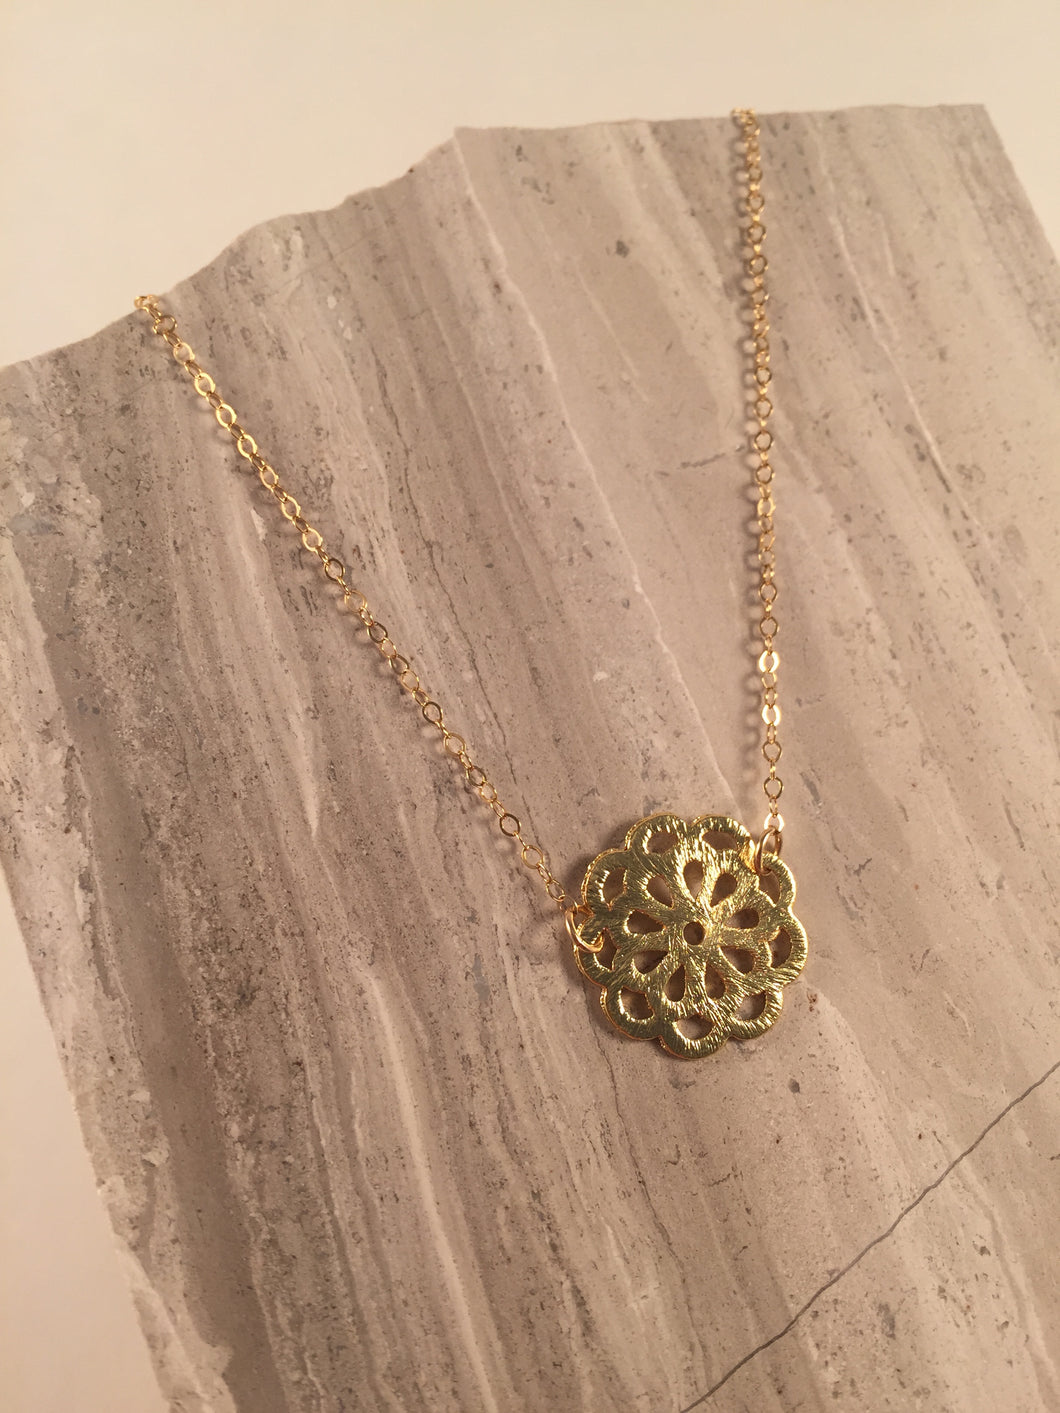 Brushed daisy necklace, gold